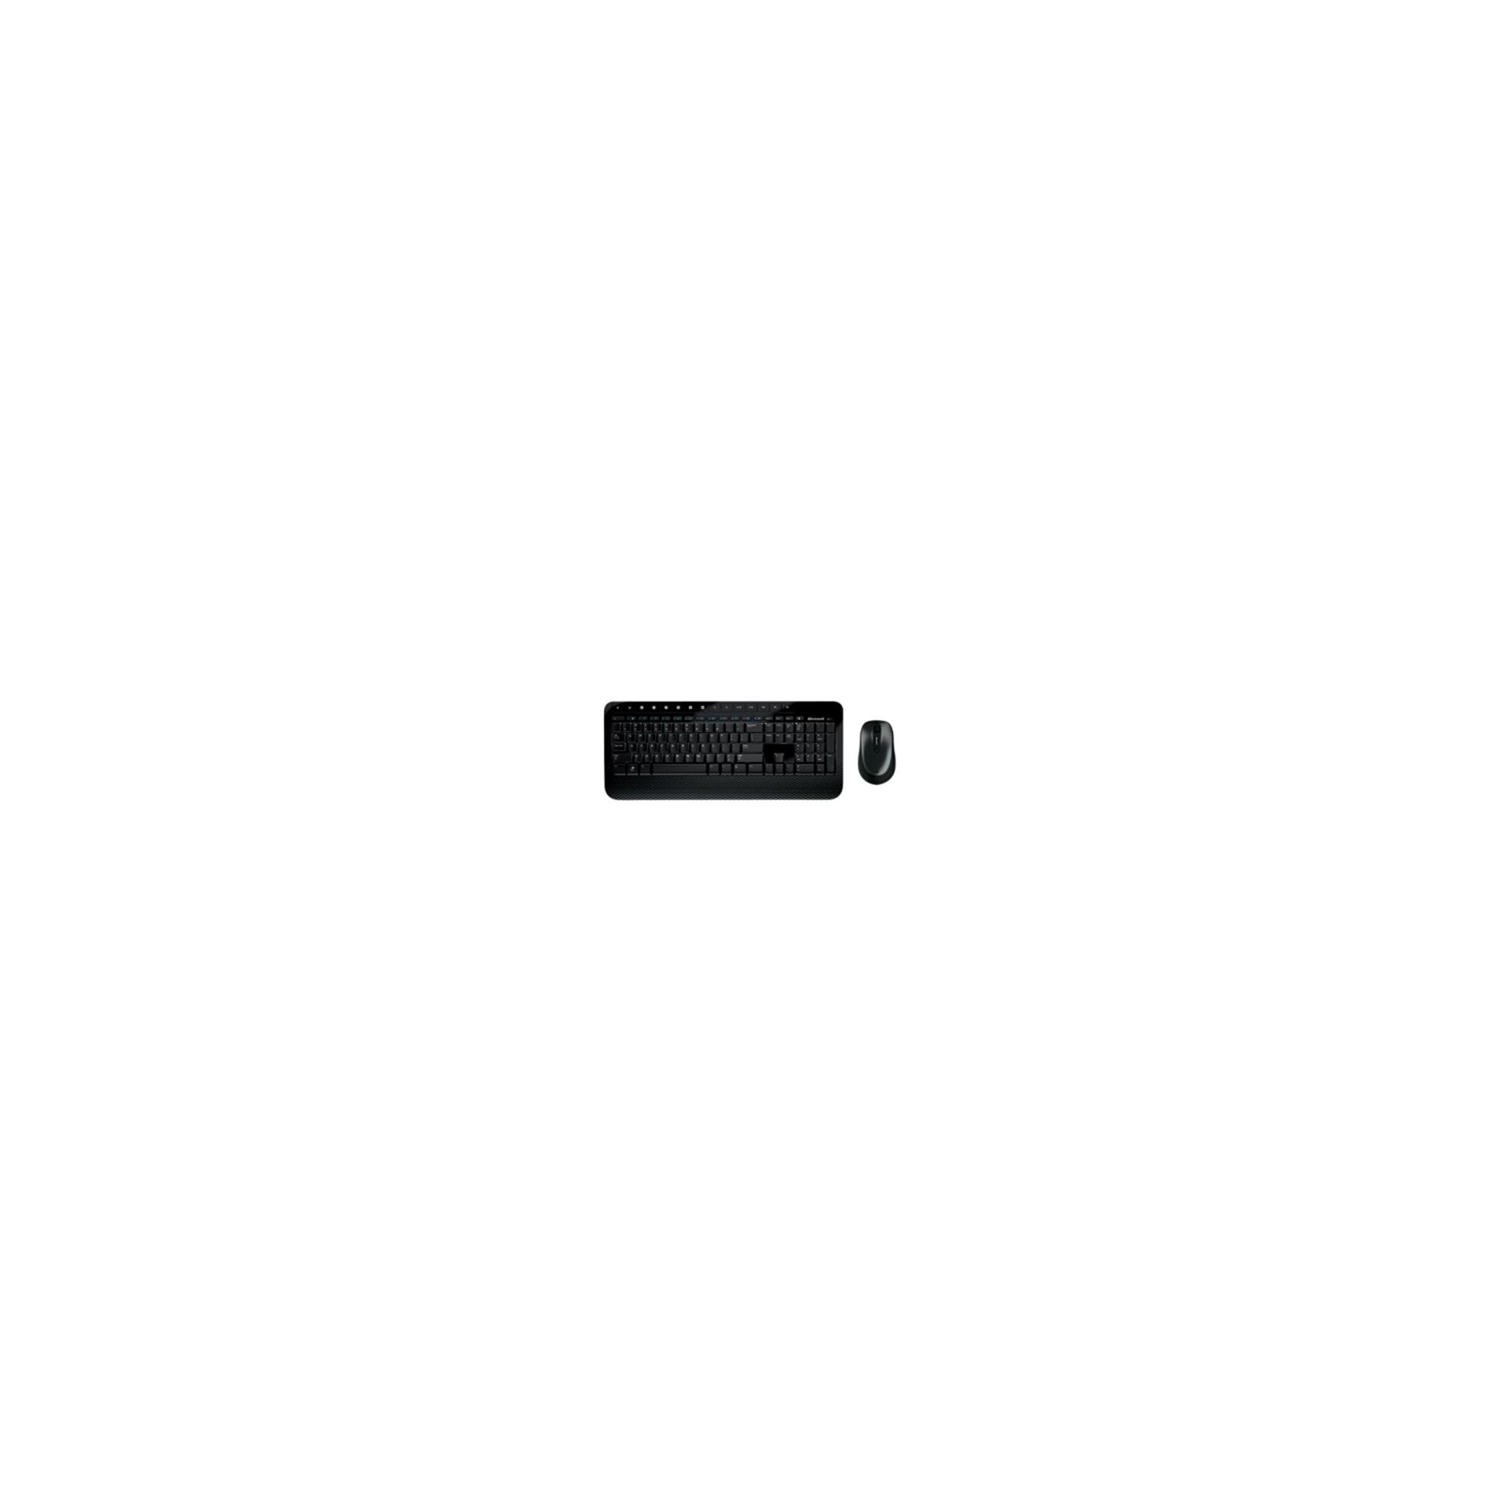 MICROSOFT WIRELESS DESKTOP 2000 M7J-00003 BLACK 105 NORMAL KEYS USB RF WIRELESS ERGONOMIC KEYBOARD & MOUSE FRENCH